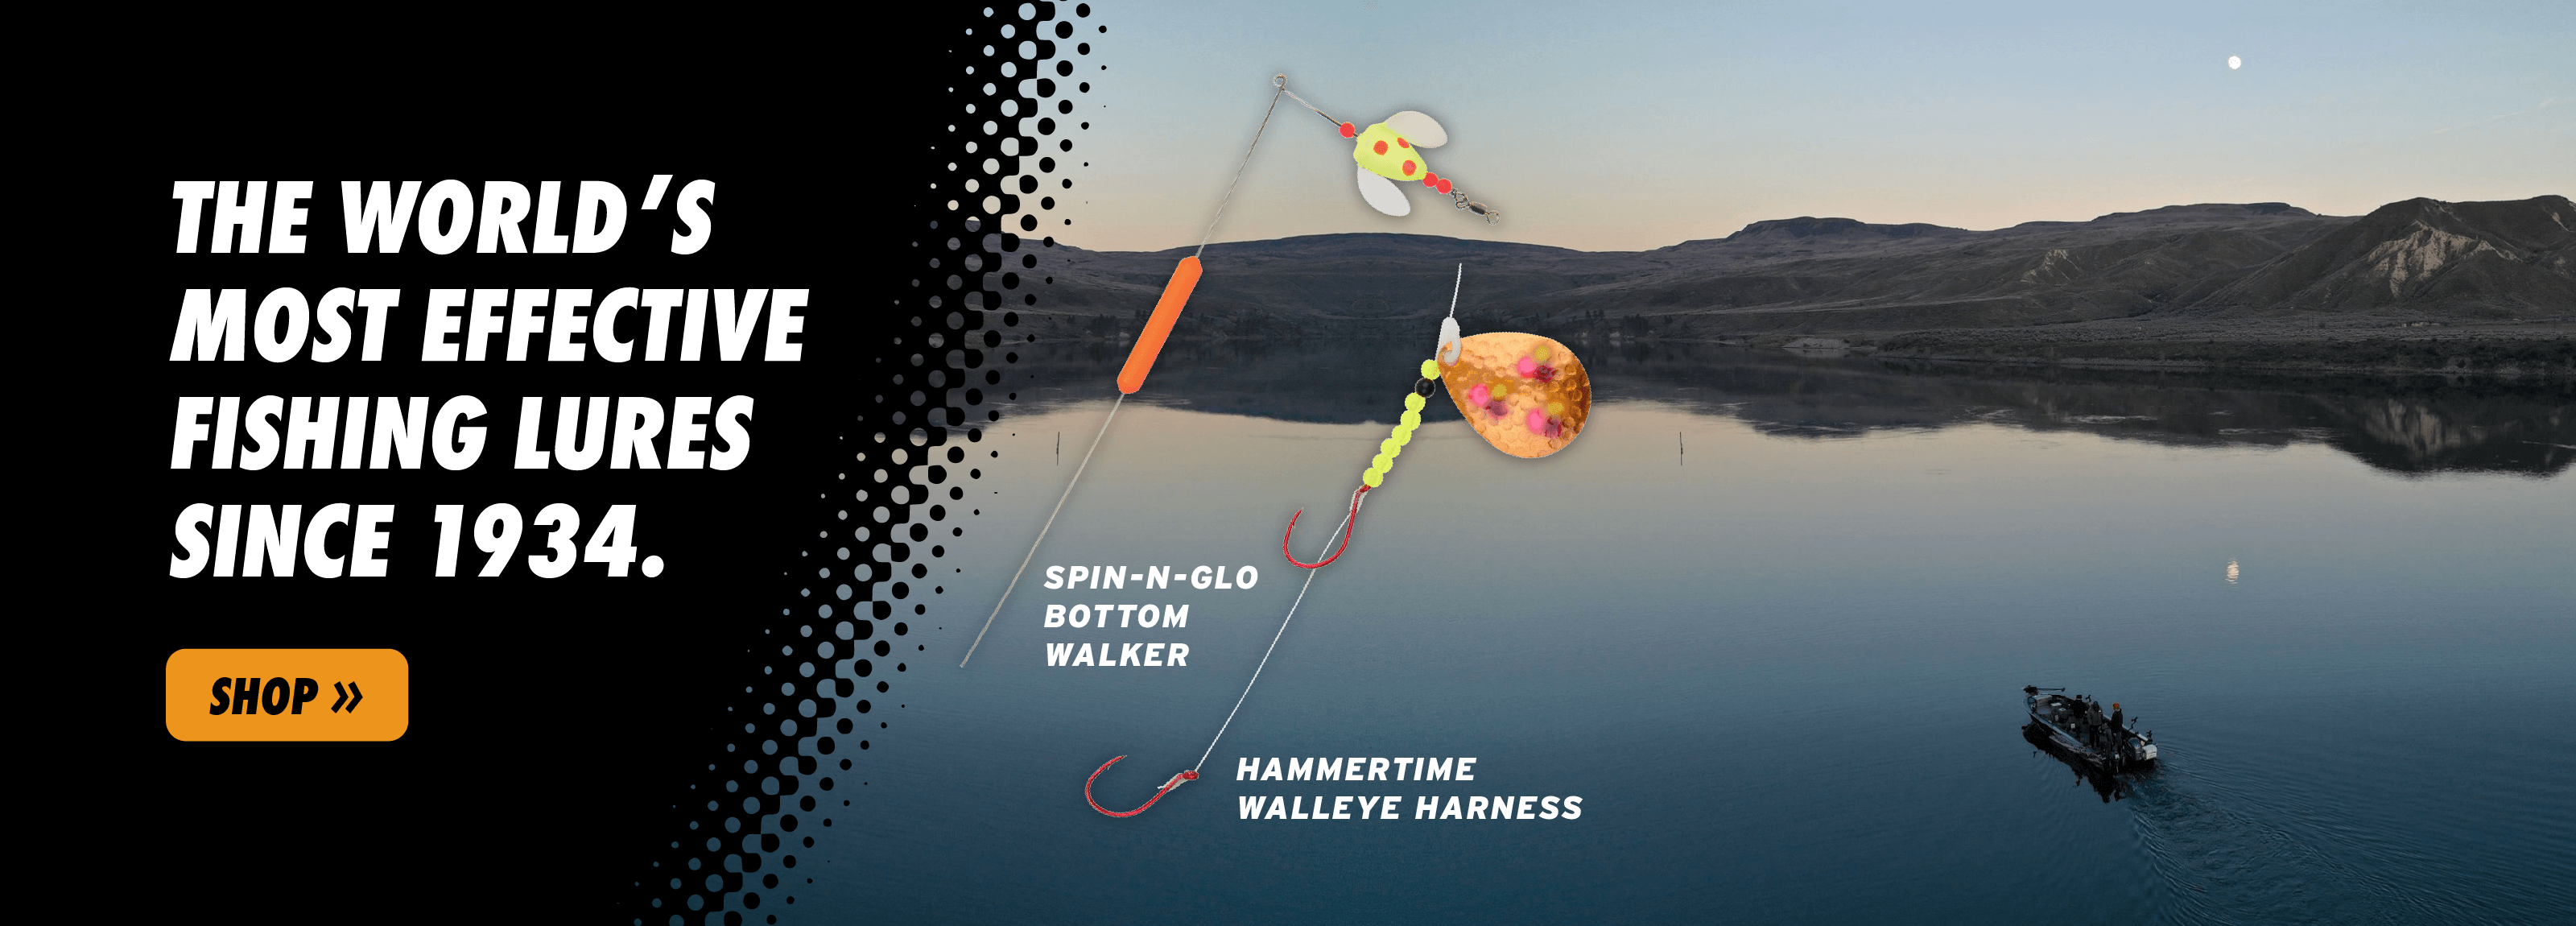 World;s Most Effective Fishing Lures since 1934 - Spin-N-Glo Bottom Walker Hammertime Walleye Harness